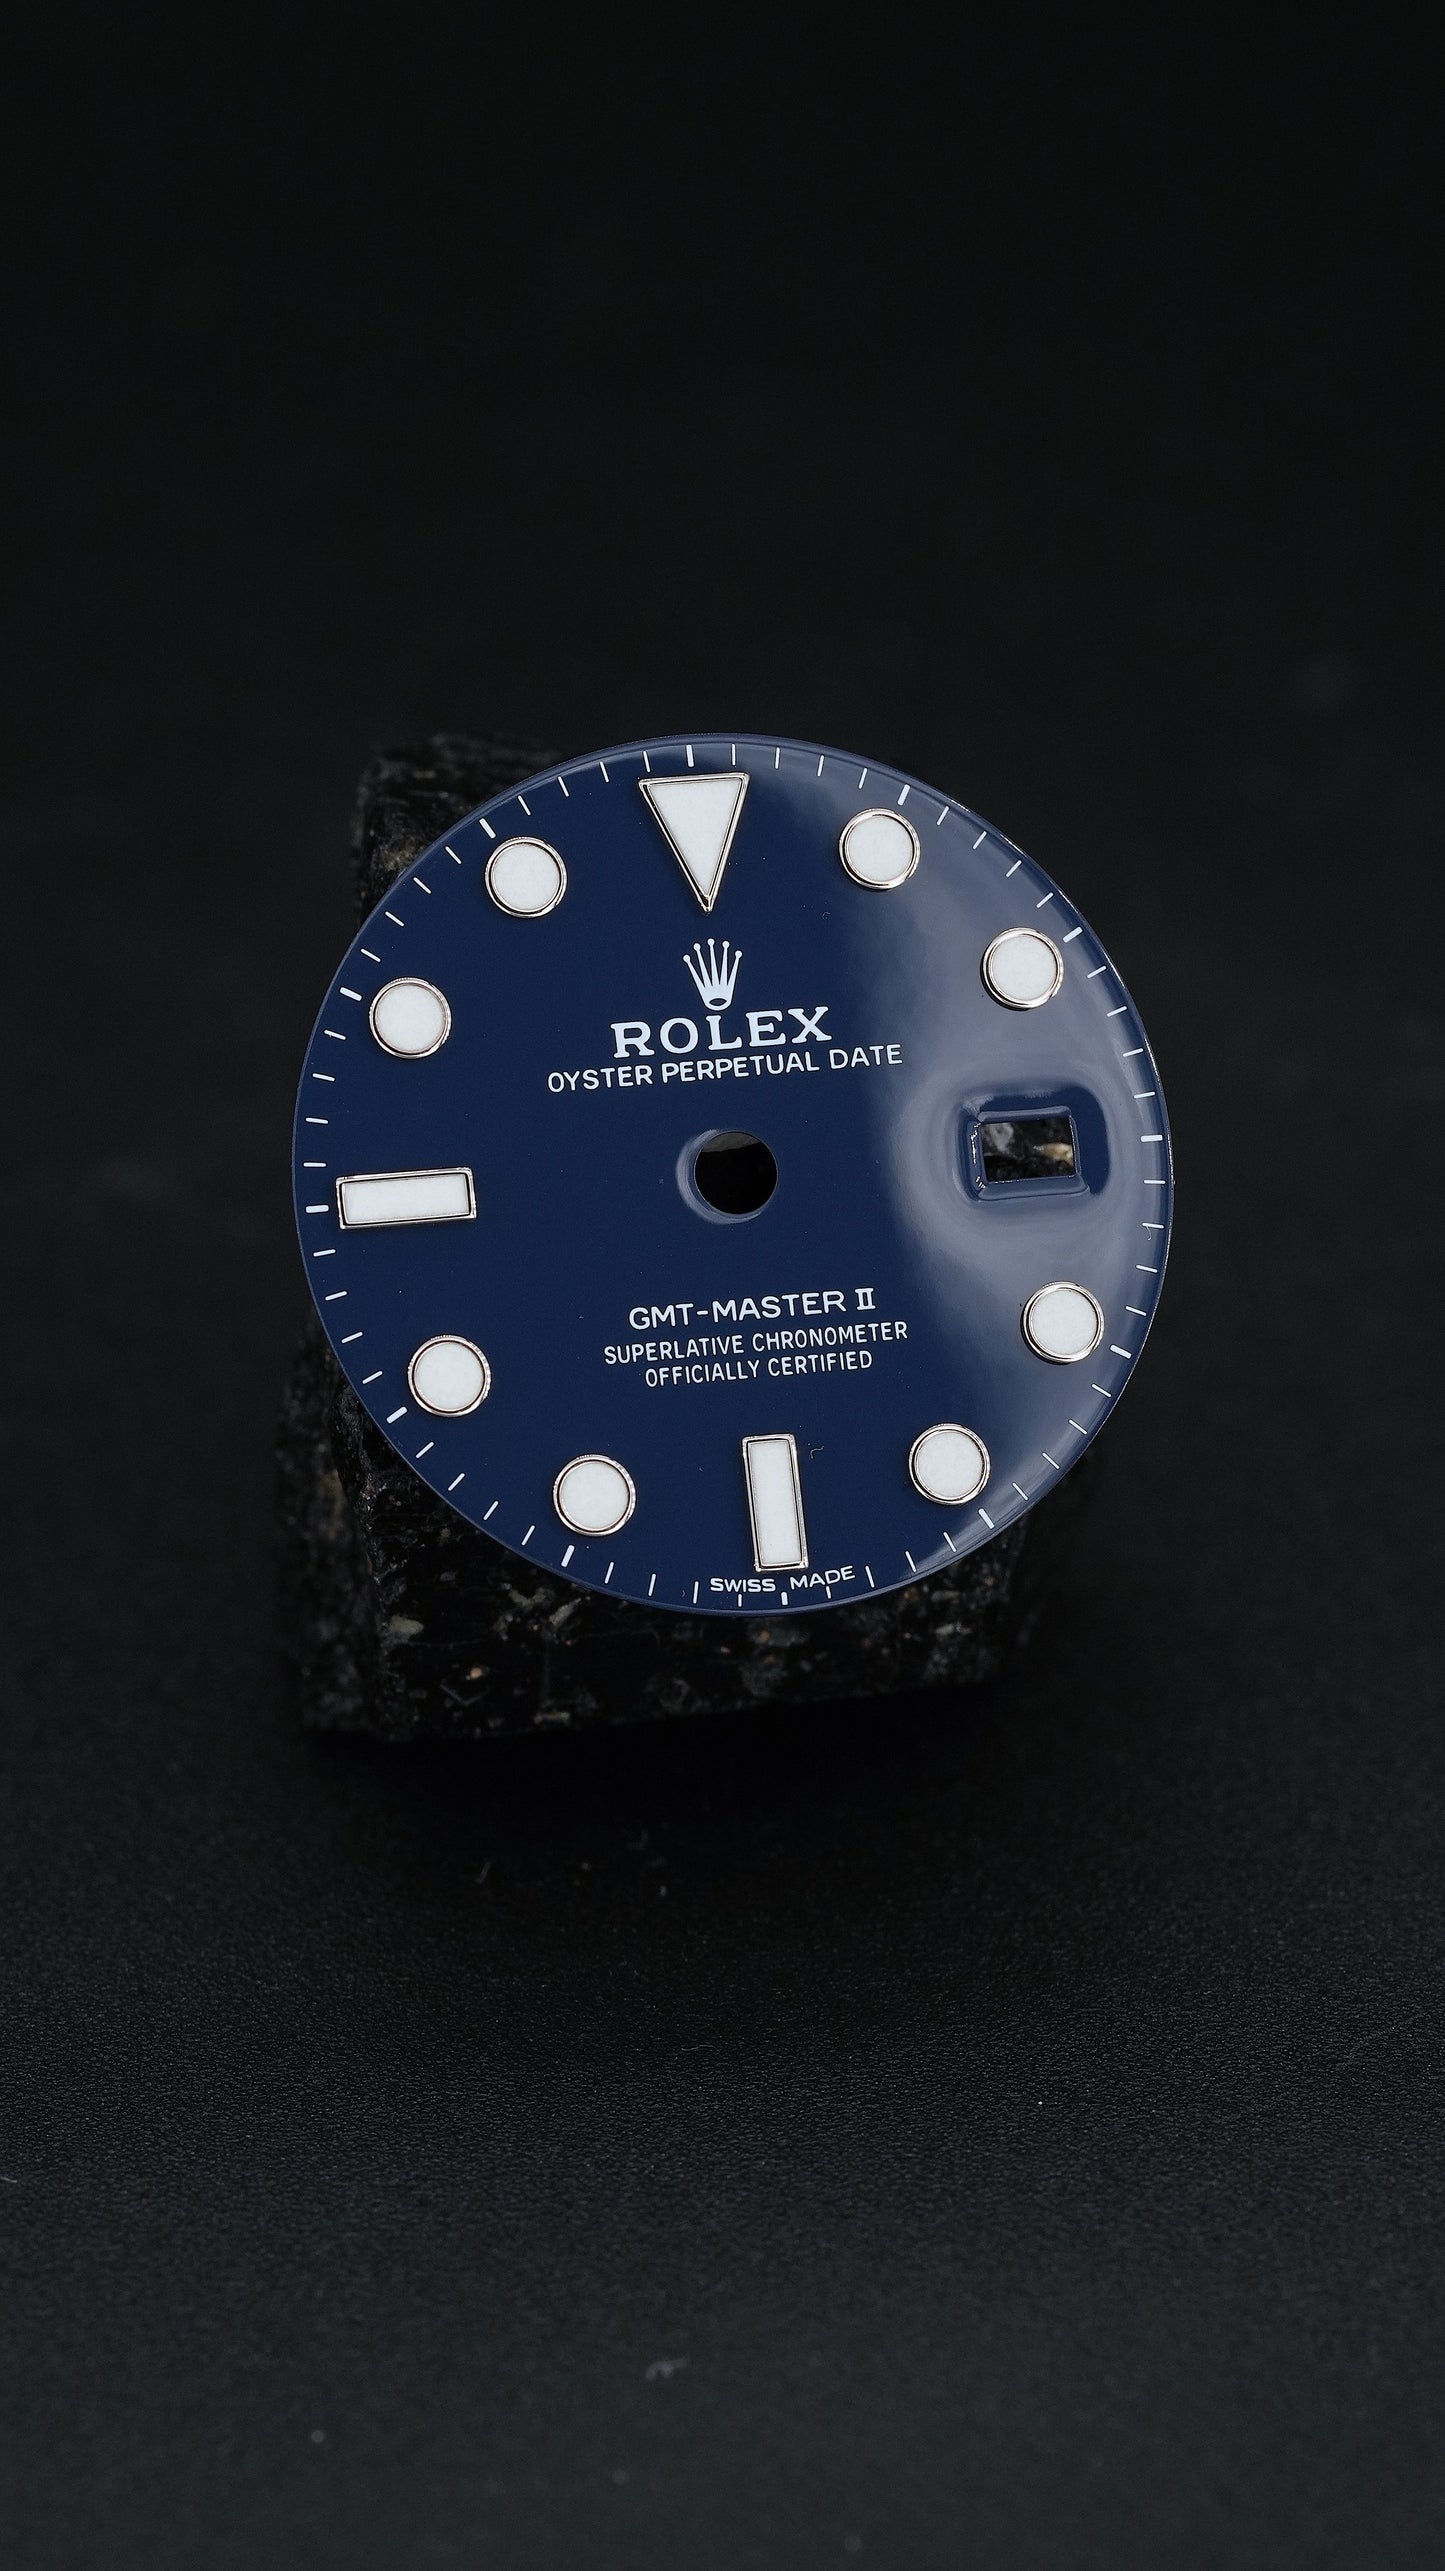 Rolex blue Dial for GMT-Master 126719 BLRO